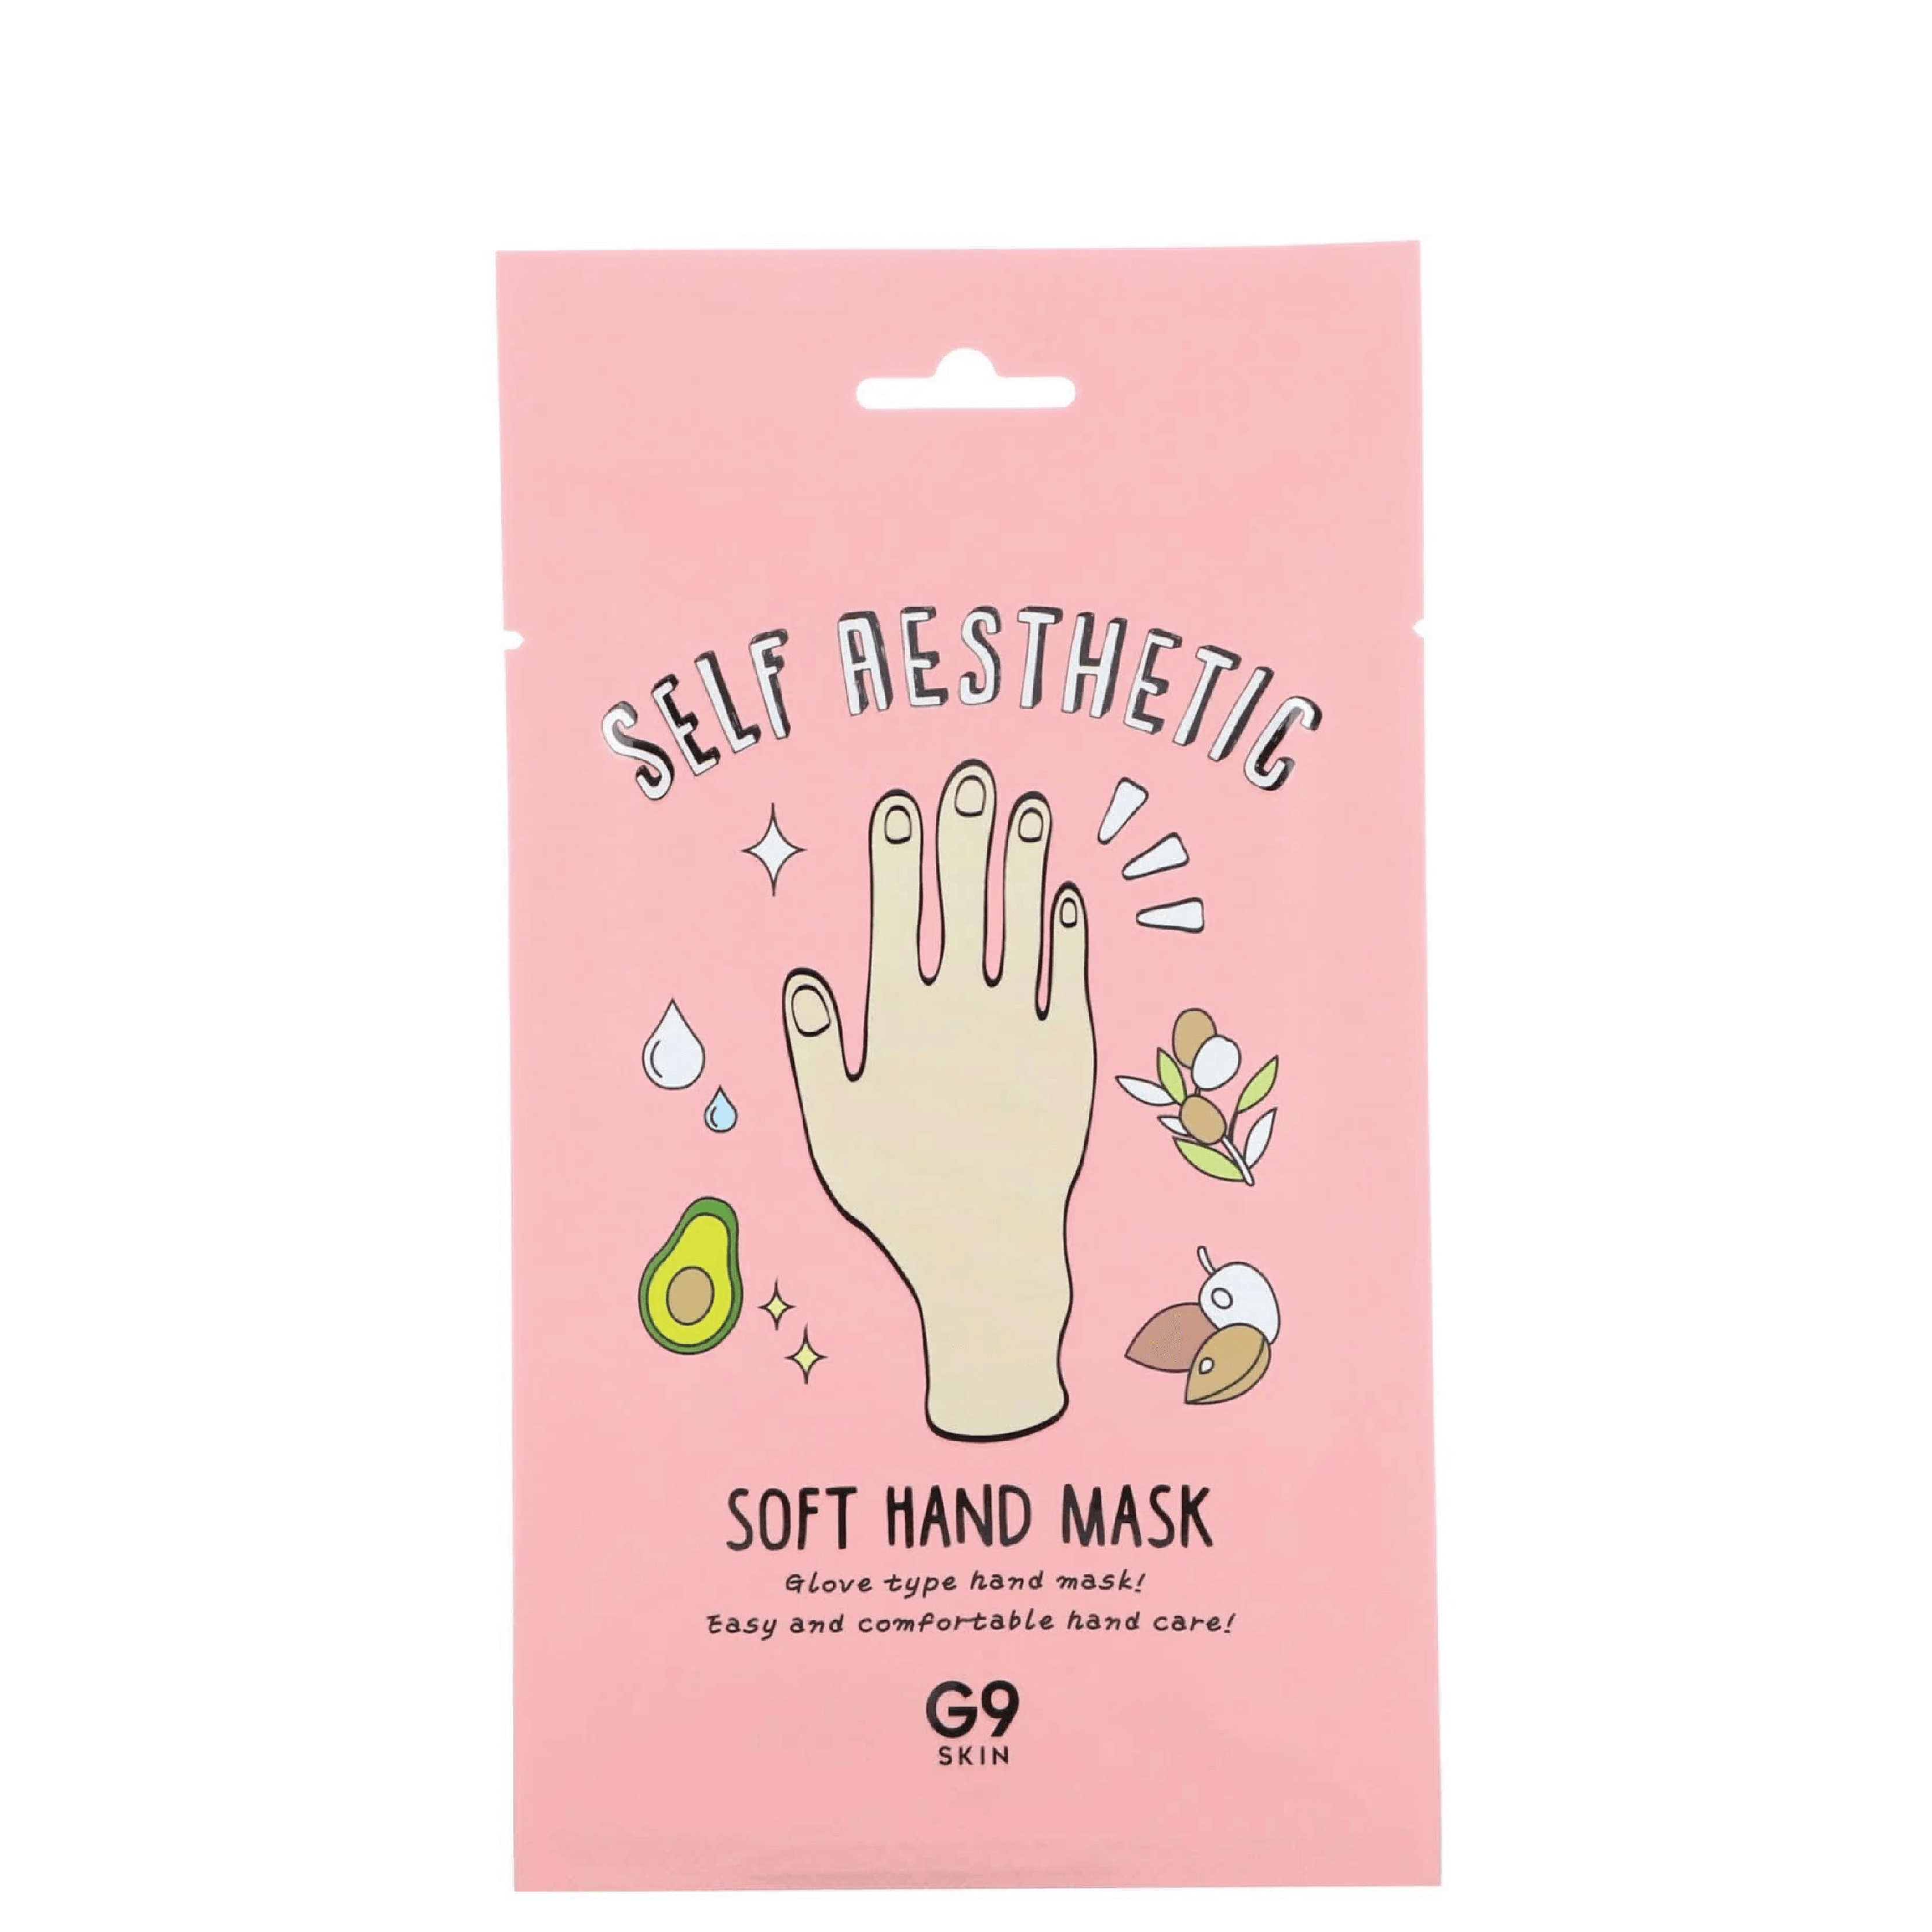 G9 Skin Self Aesthetic Soft Hand Mask 5ea